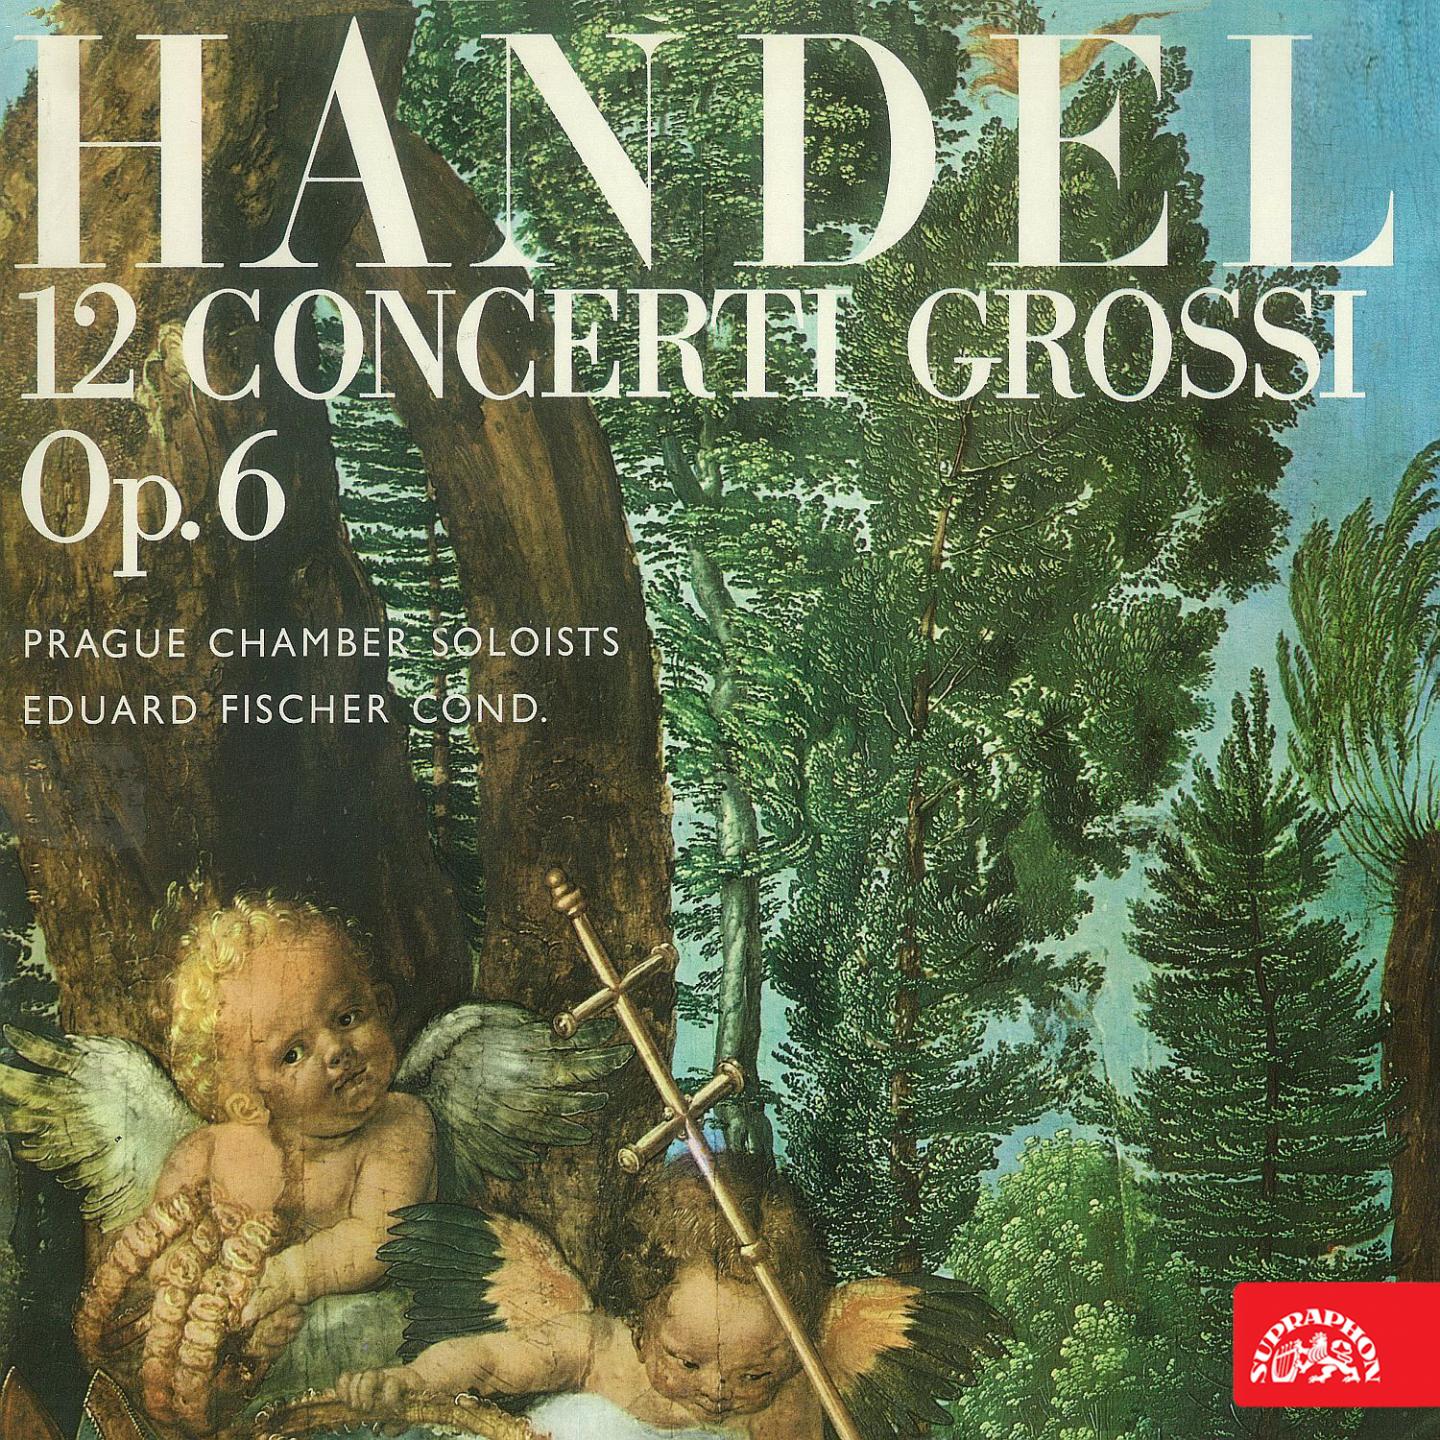 12 Concerti grossi, Op. 6, No. 9 in F Major, HWV 327: III. Larghetto